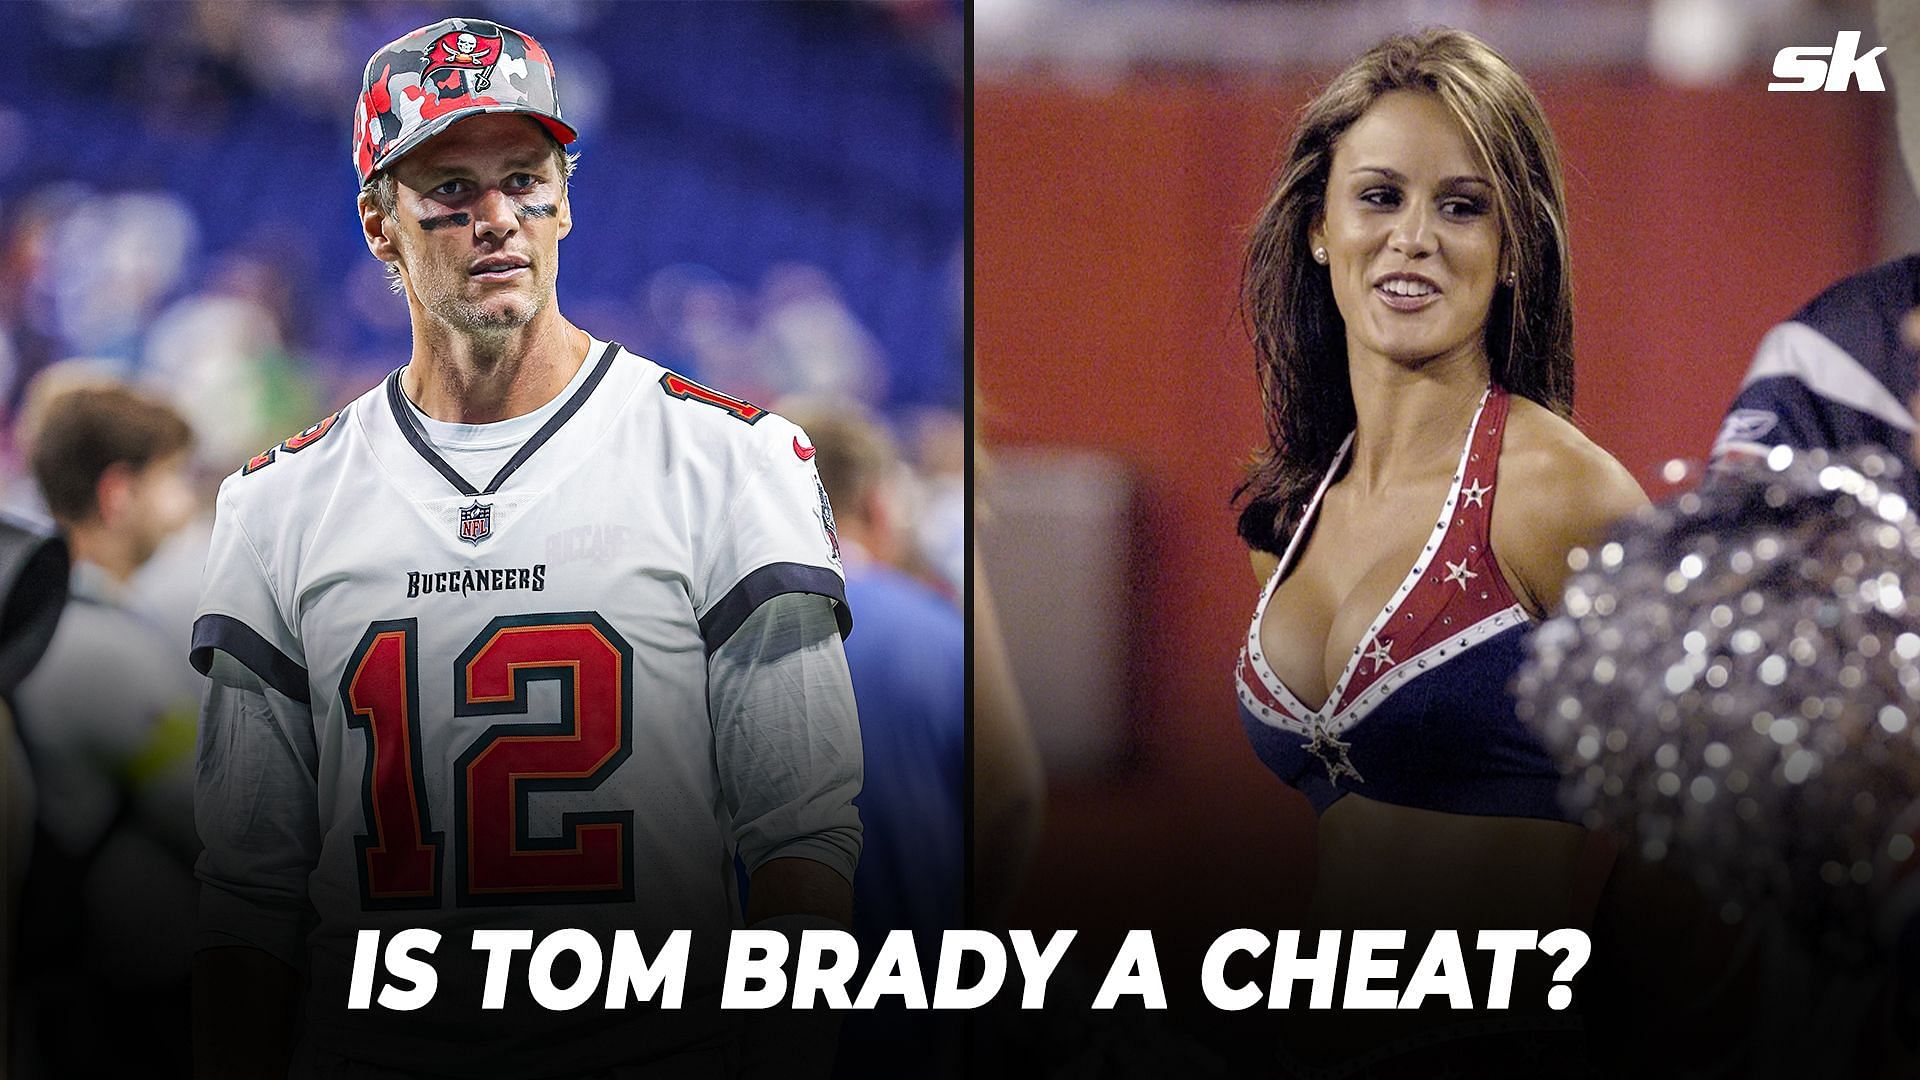 Tom Brady apparently had an affair with a New England Patriots cheerleader